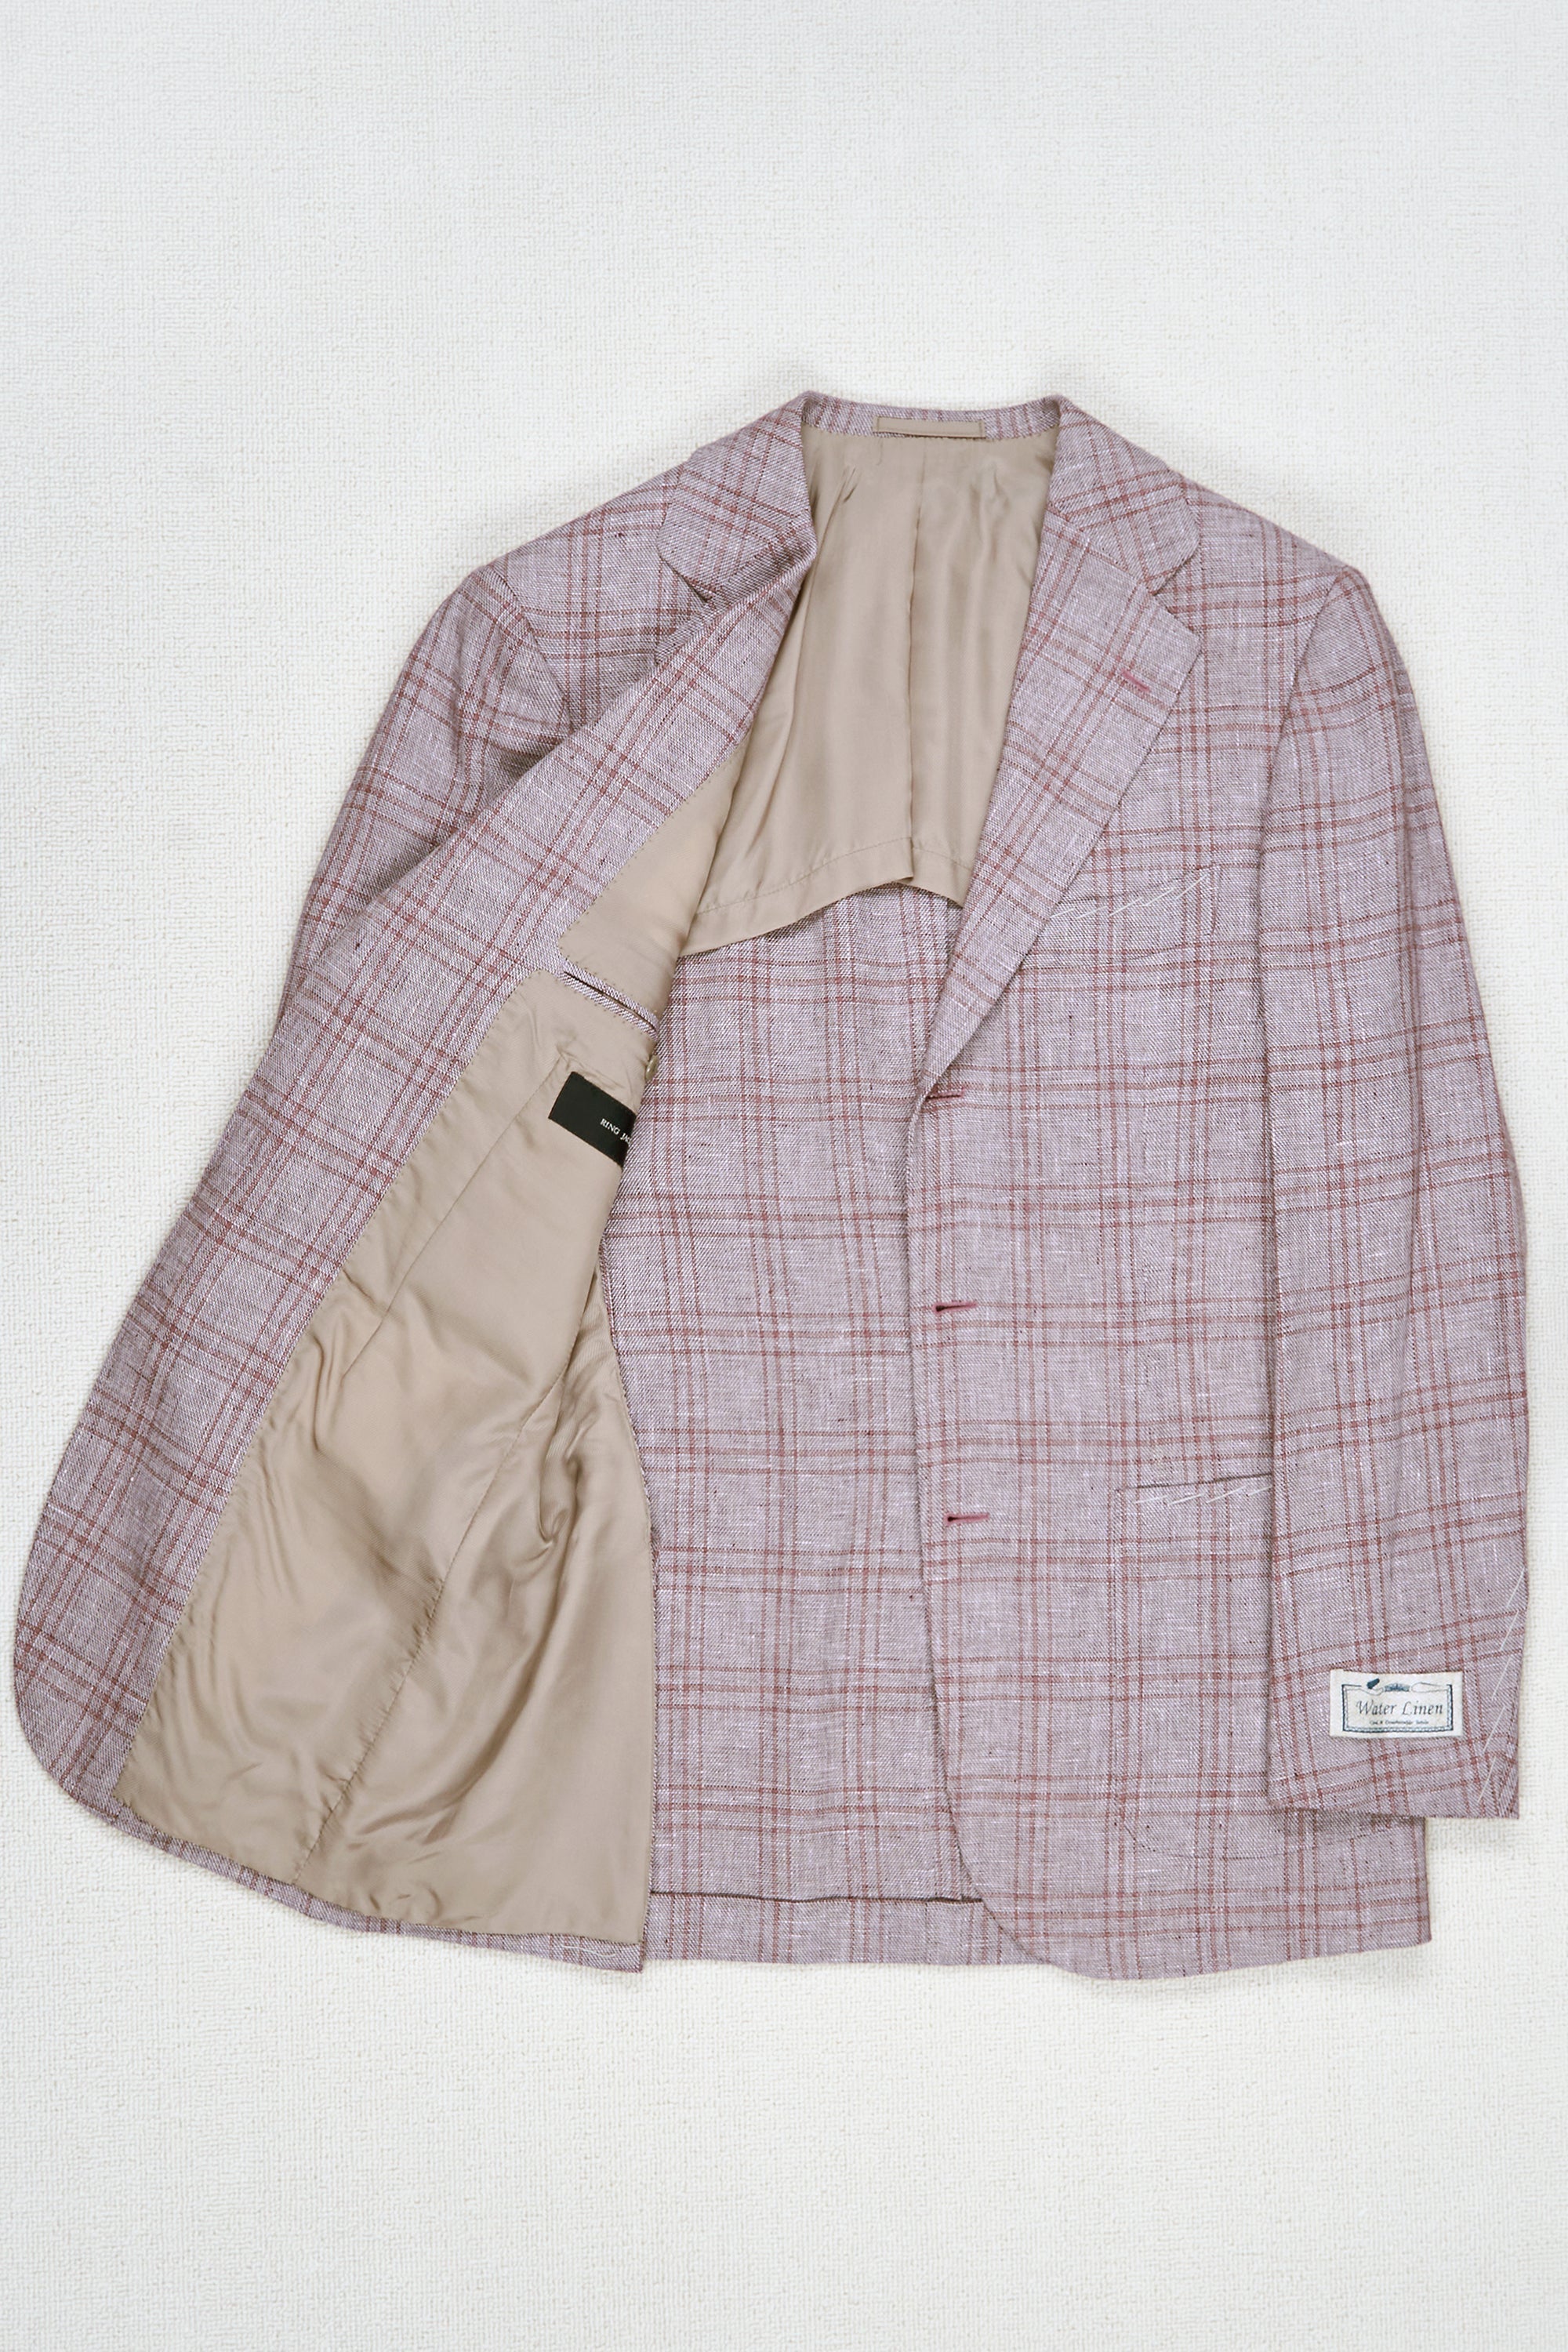 Ring Jacket AMJ01 Pink Linen Check Sport Coat